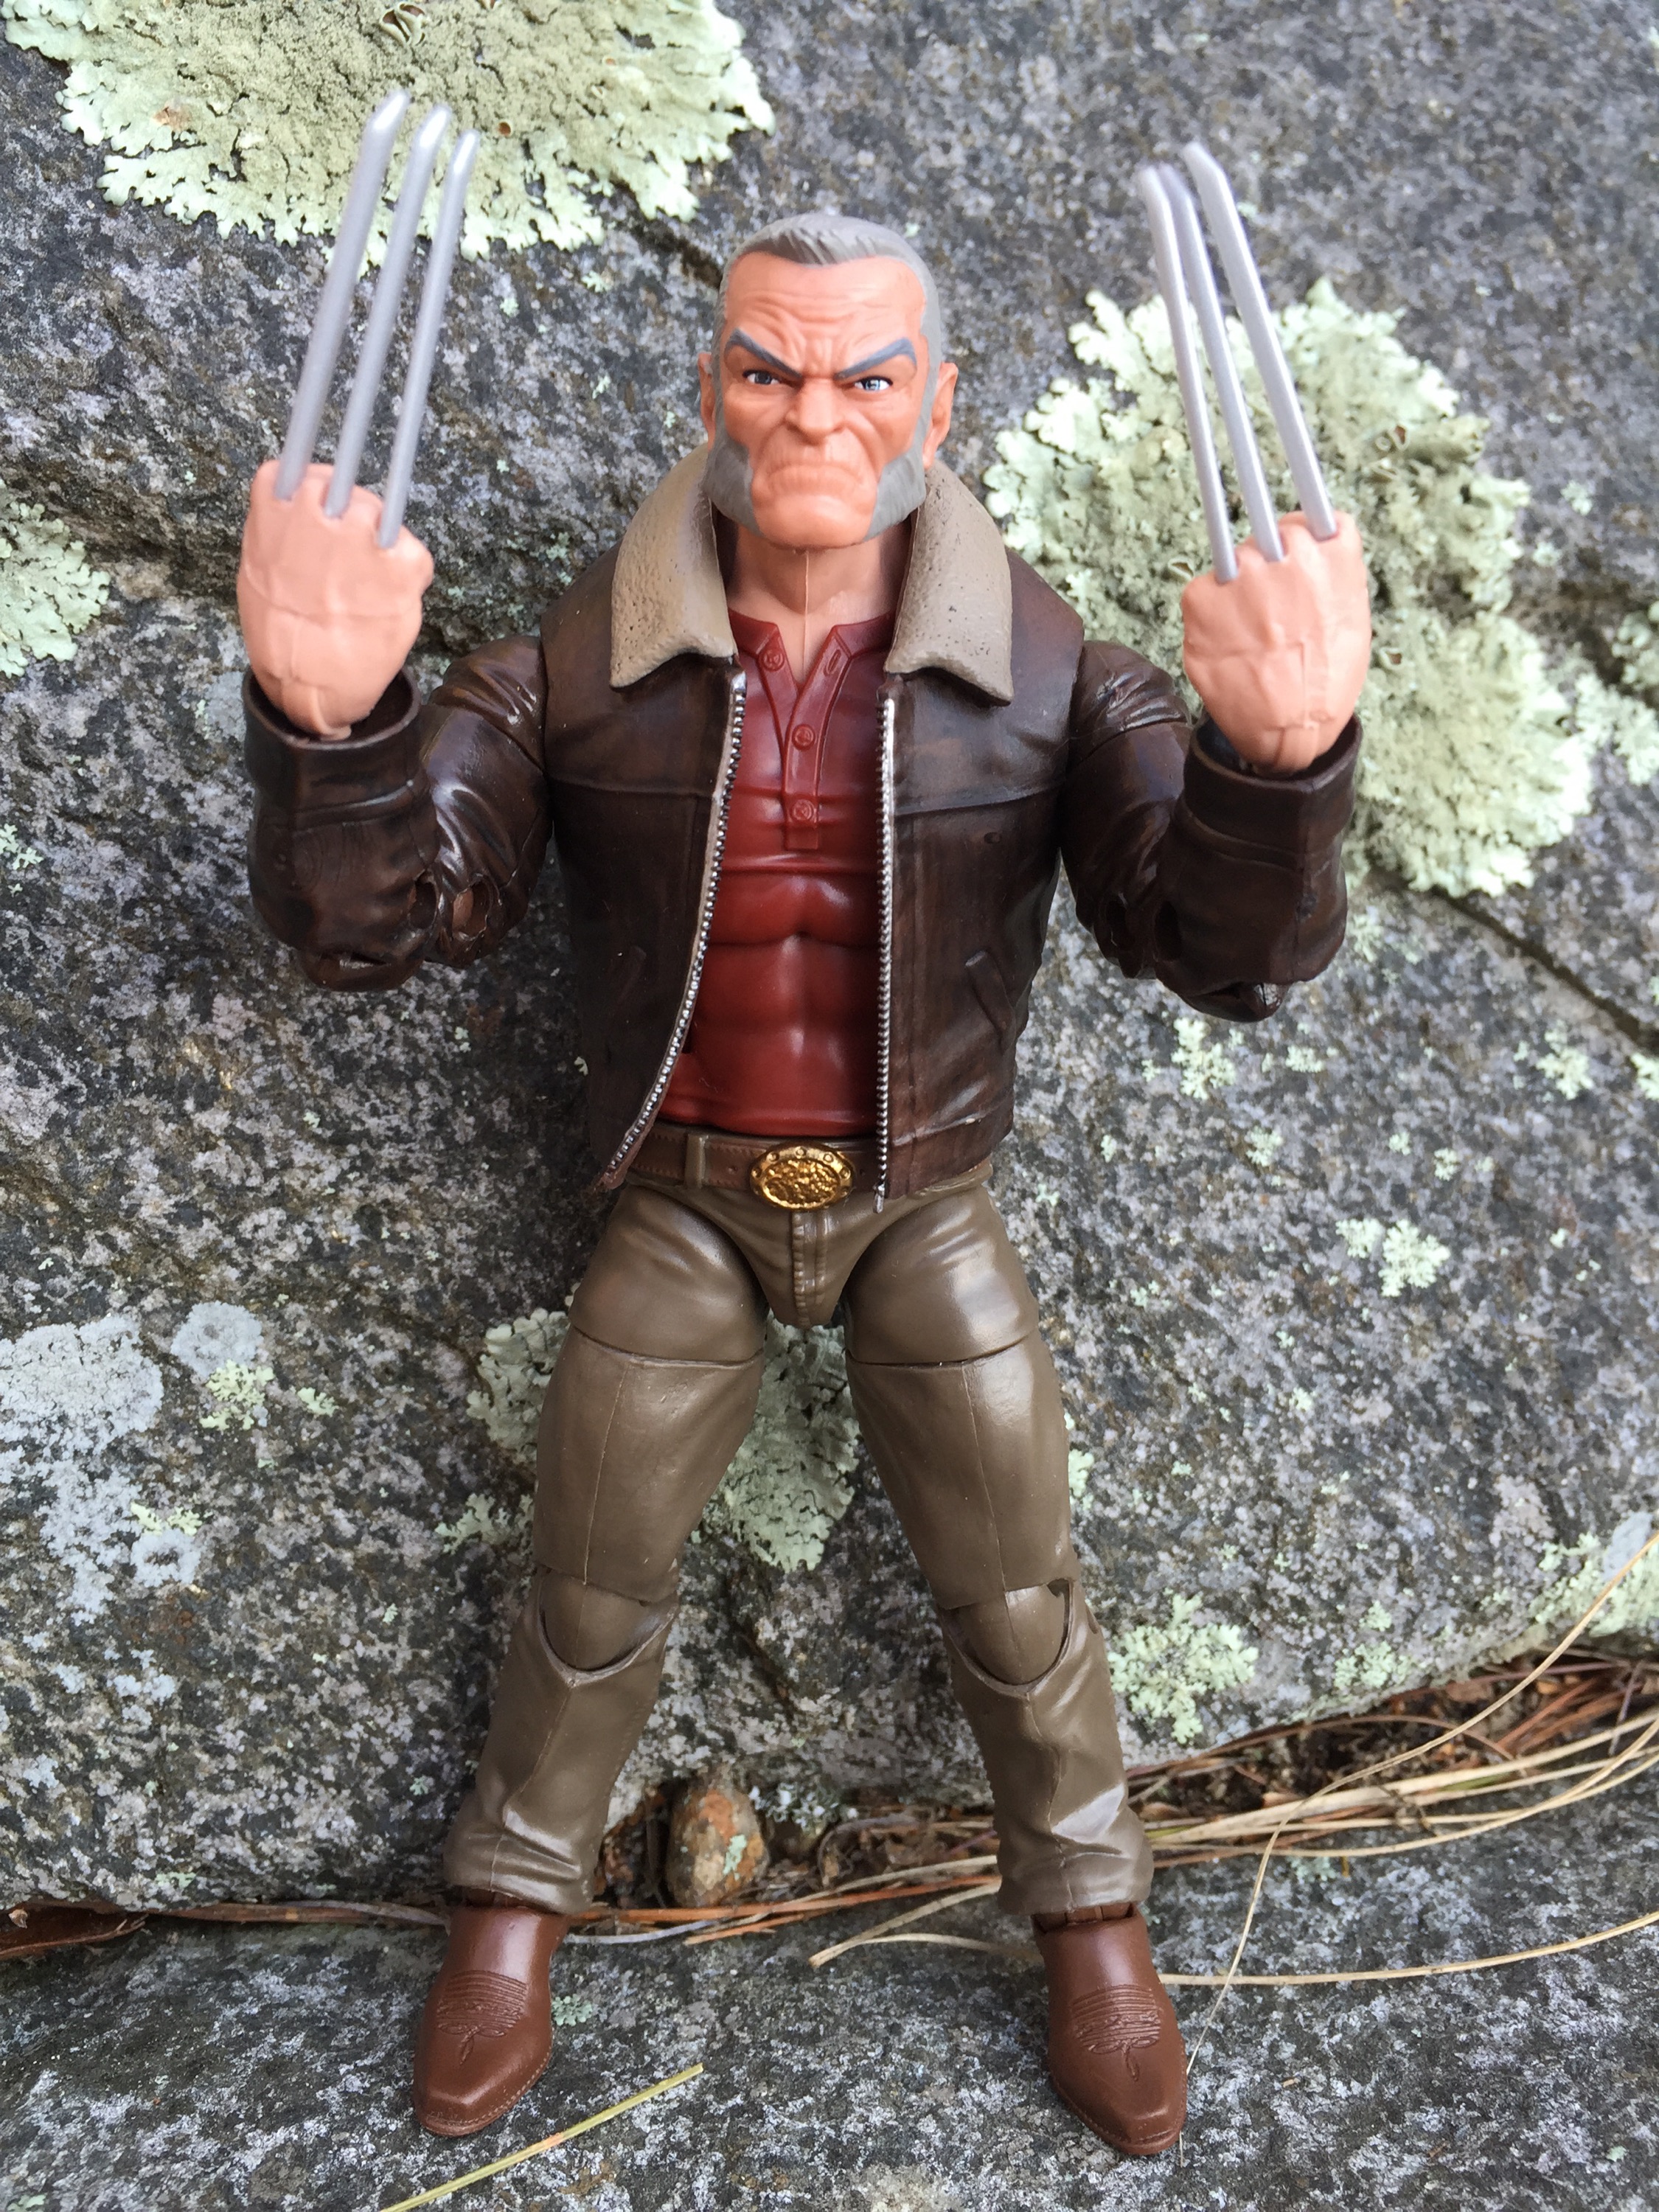 XMen Marvel Legends Old Man Logan Figure Review & Photos